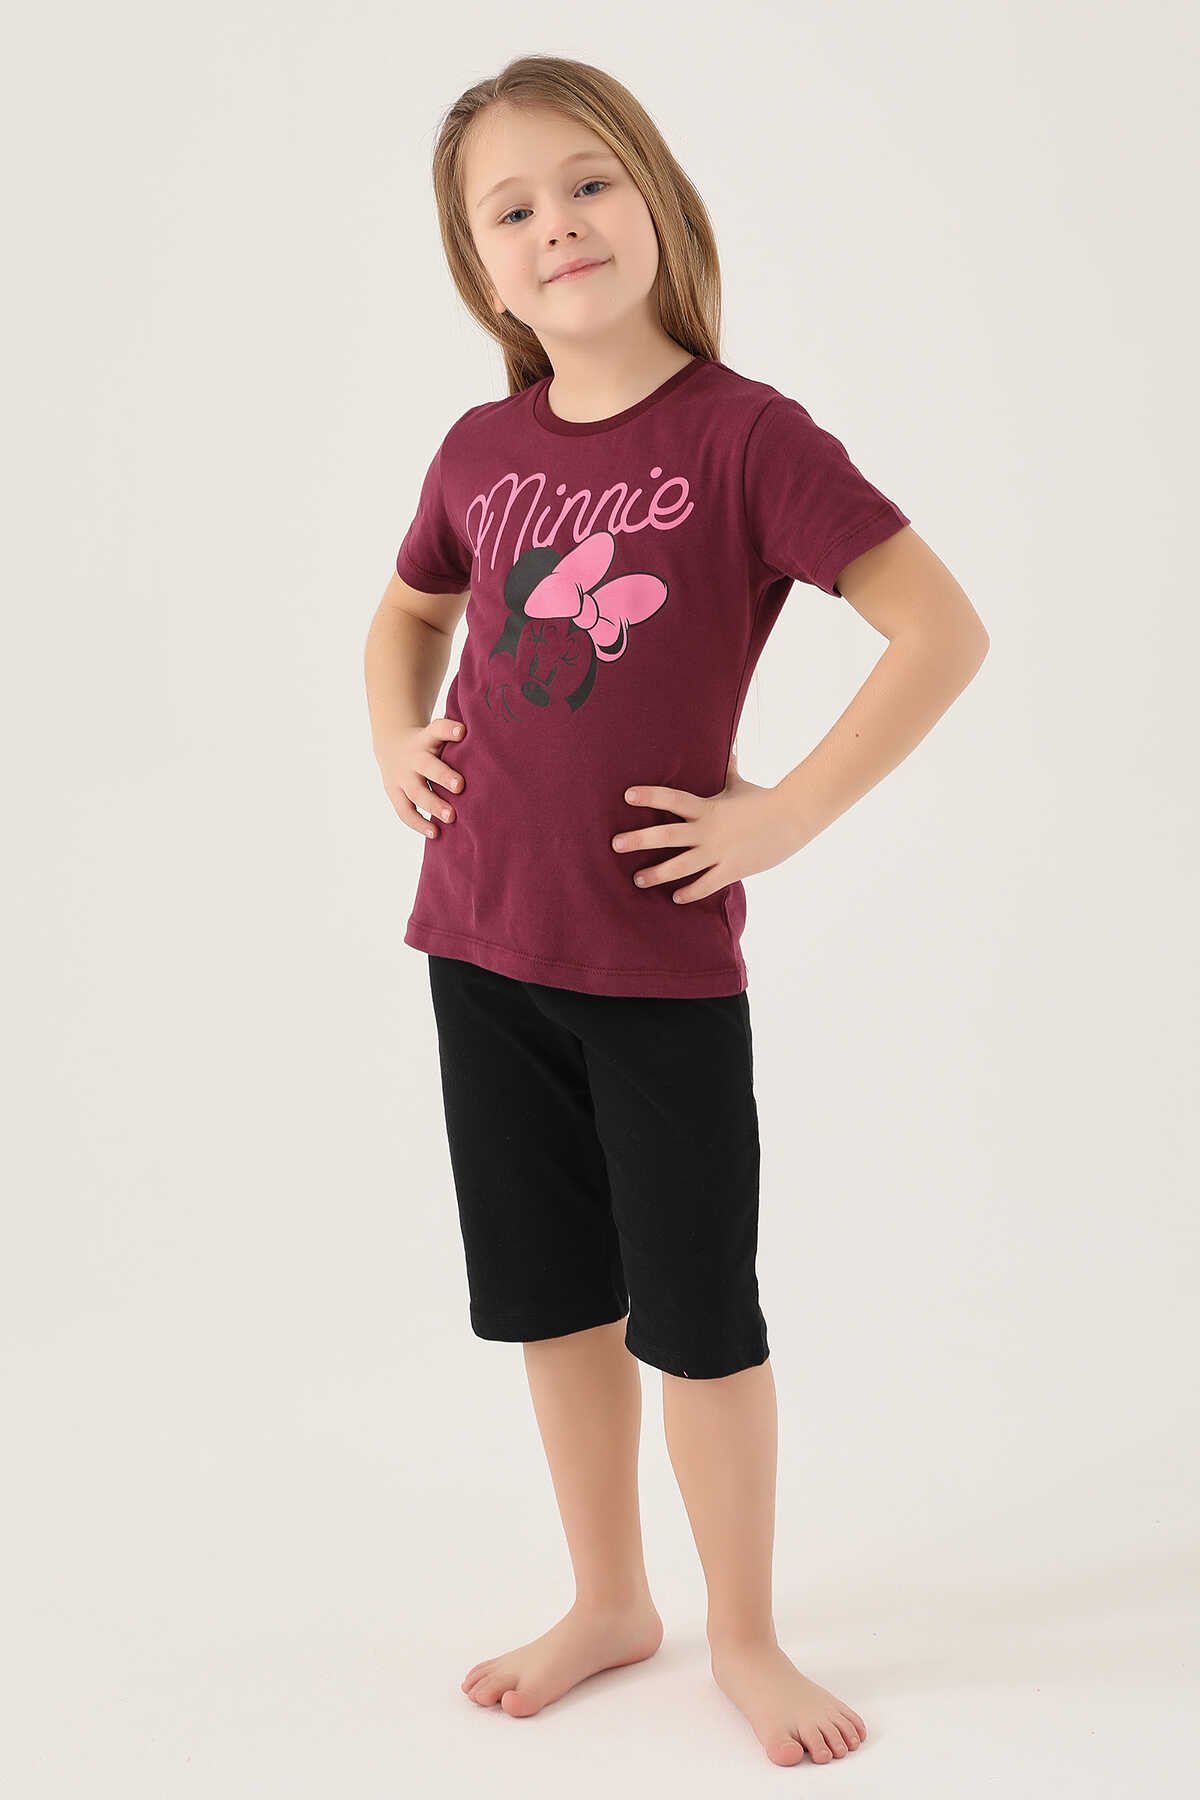 Minnie Mouse - Minnie Mouse D4805-2 Kız Çocuk T-Shirt Yaban Mersini